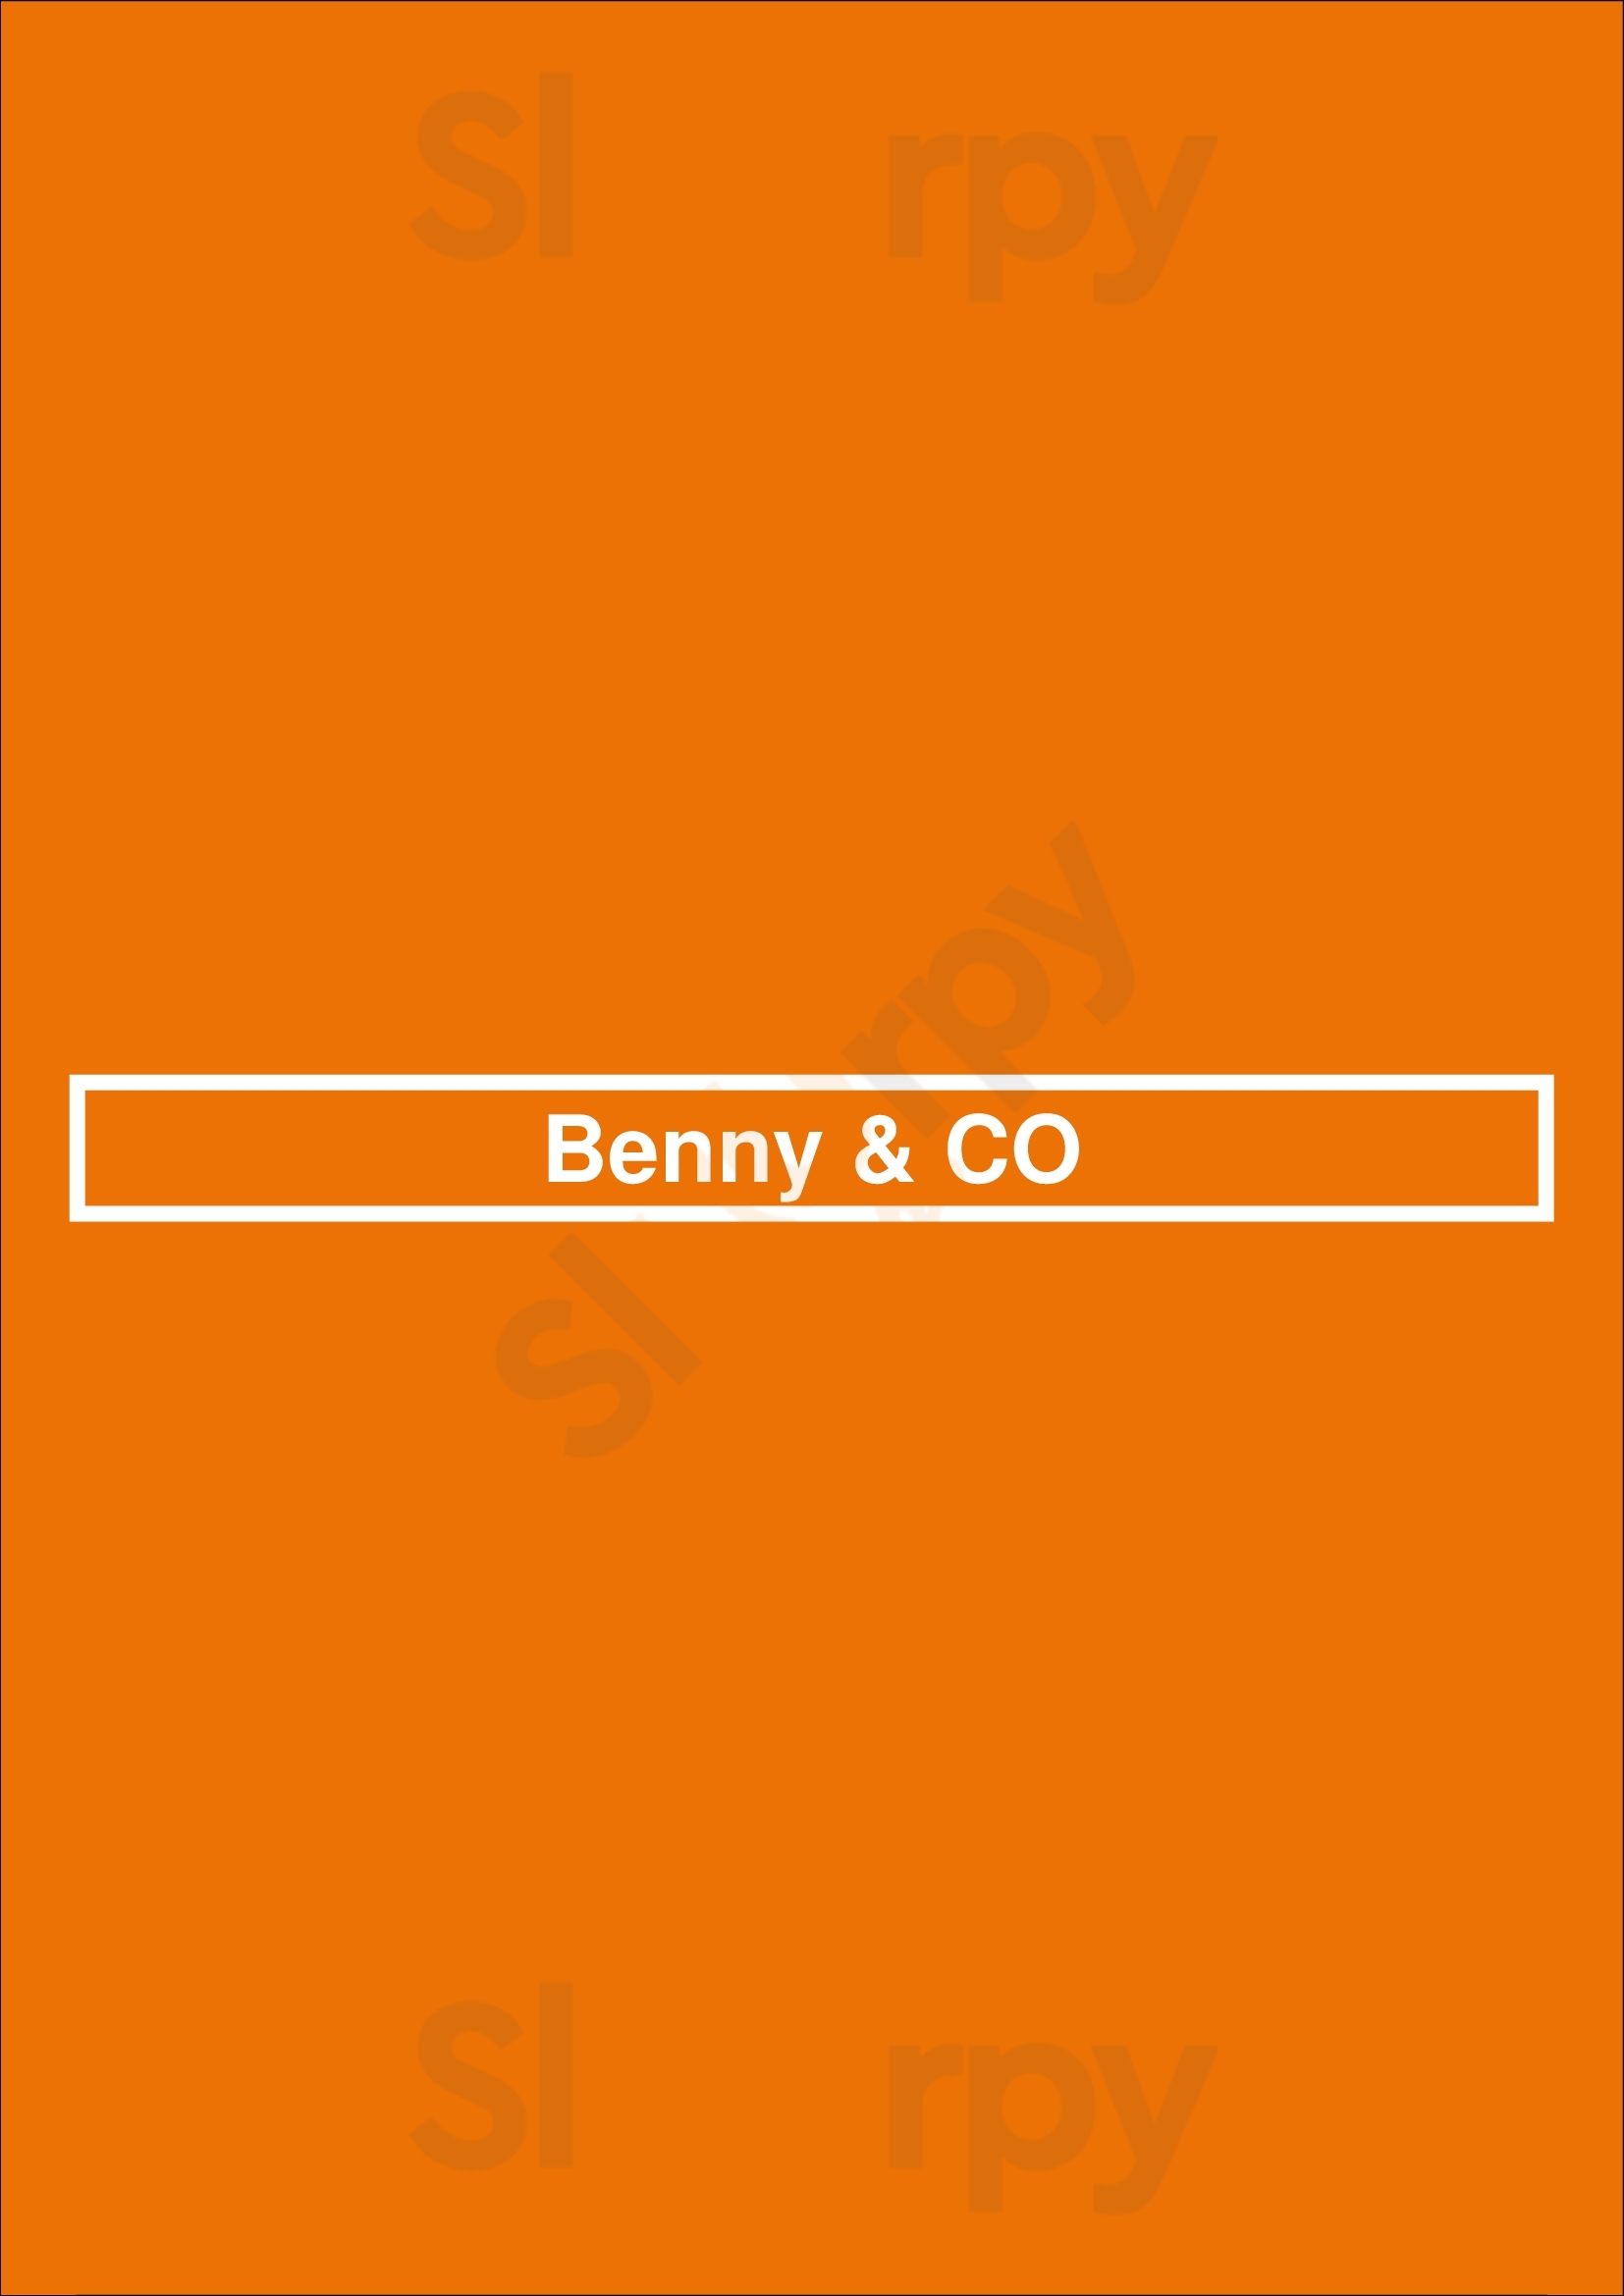 Benny And Co. Joliette Menu - 1